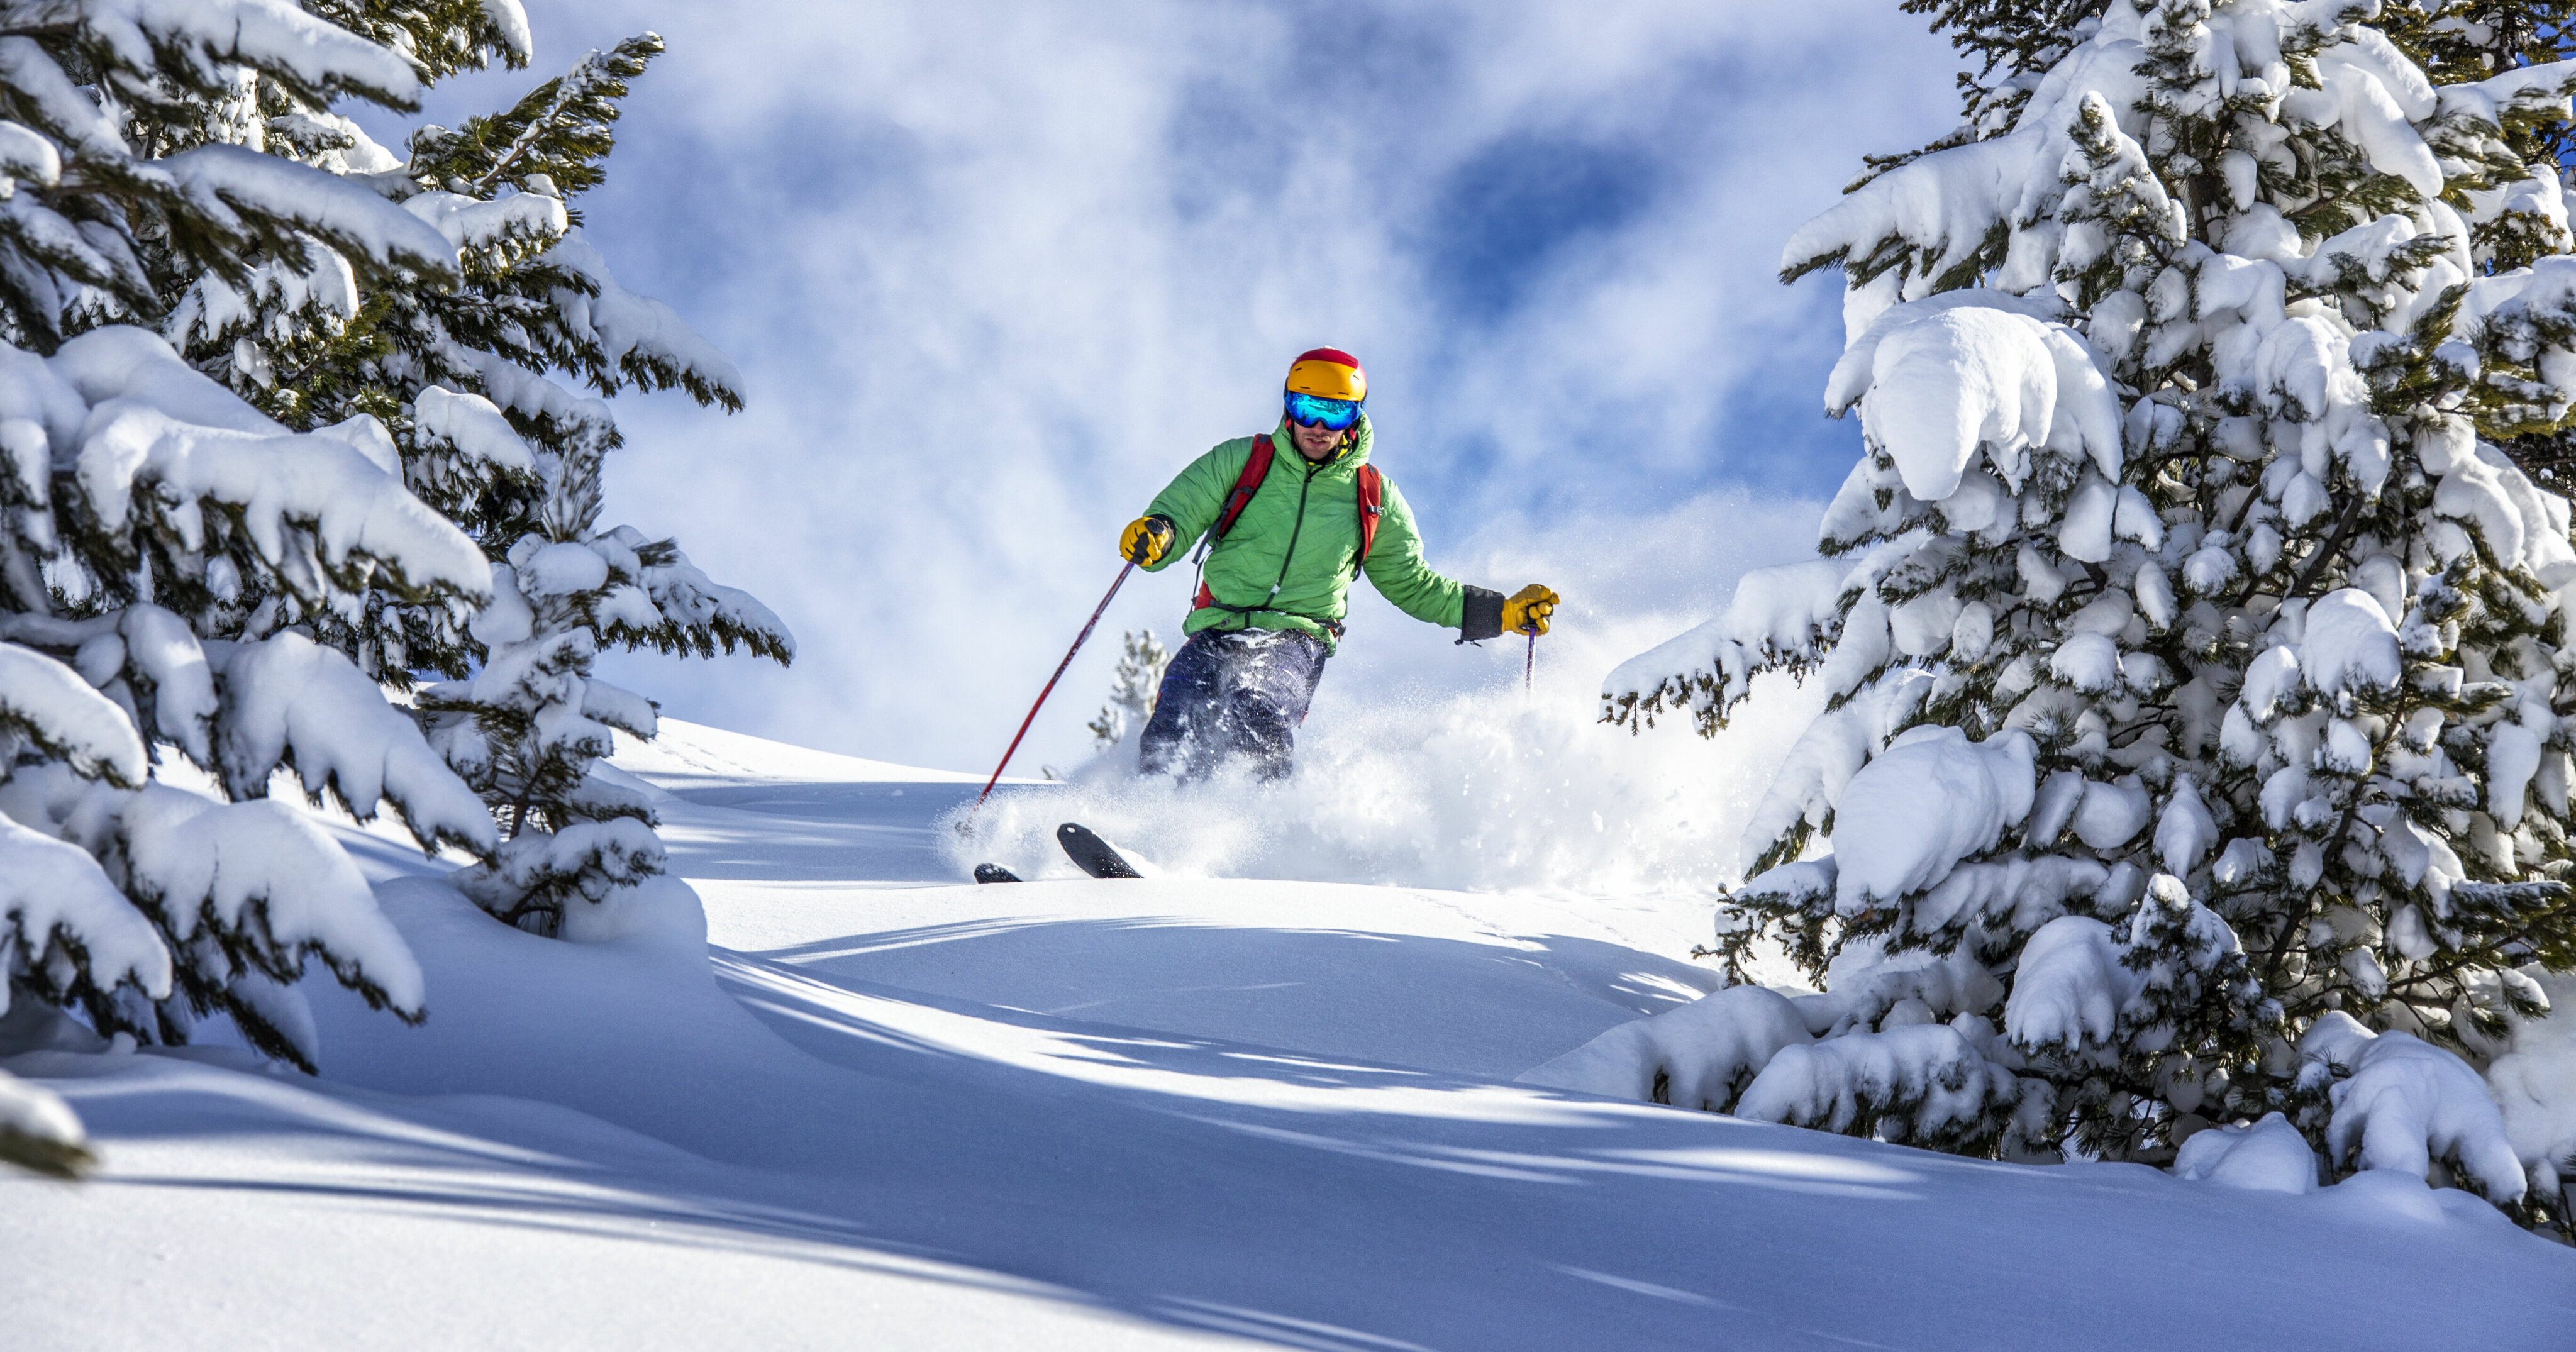 MidAtlantic ski resorts see colder temps, snowmaking opportunities